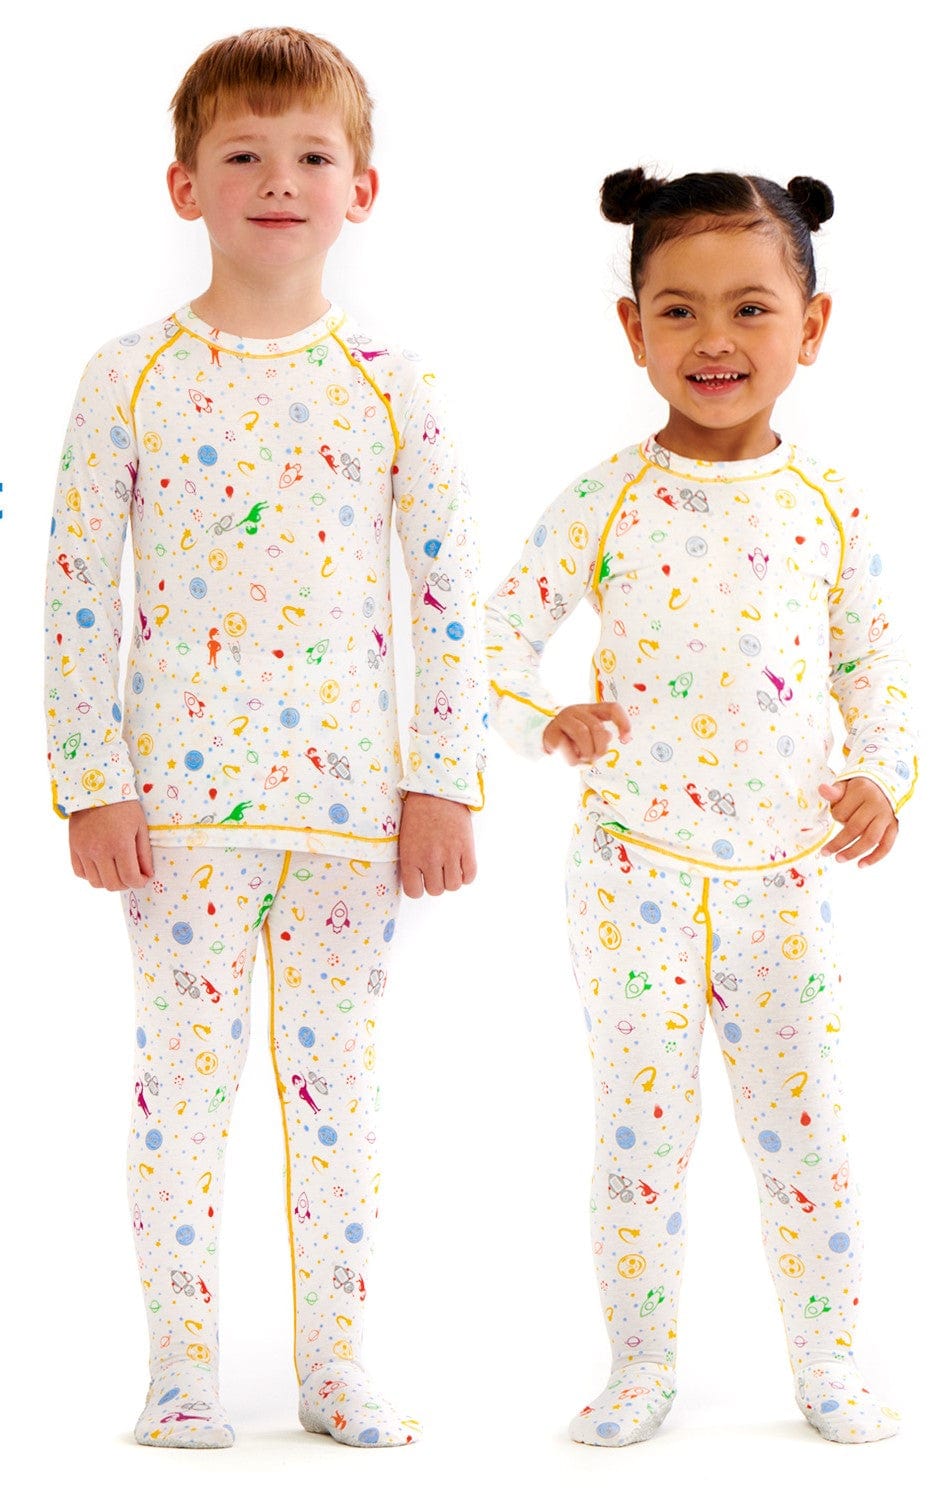 Best Eczema Pyjamas for Children To Reduce Itching